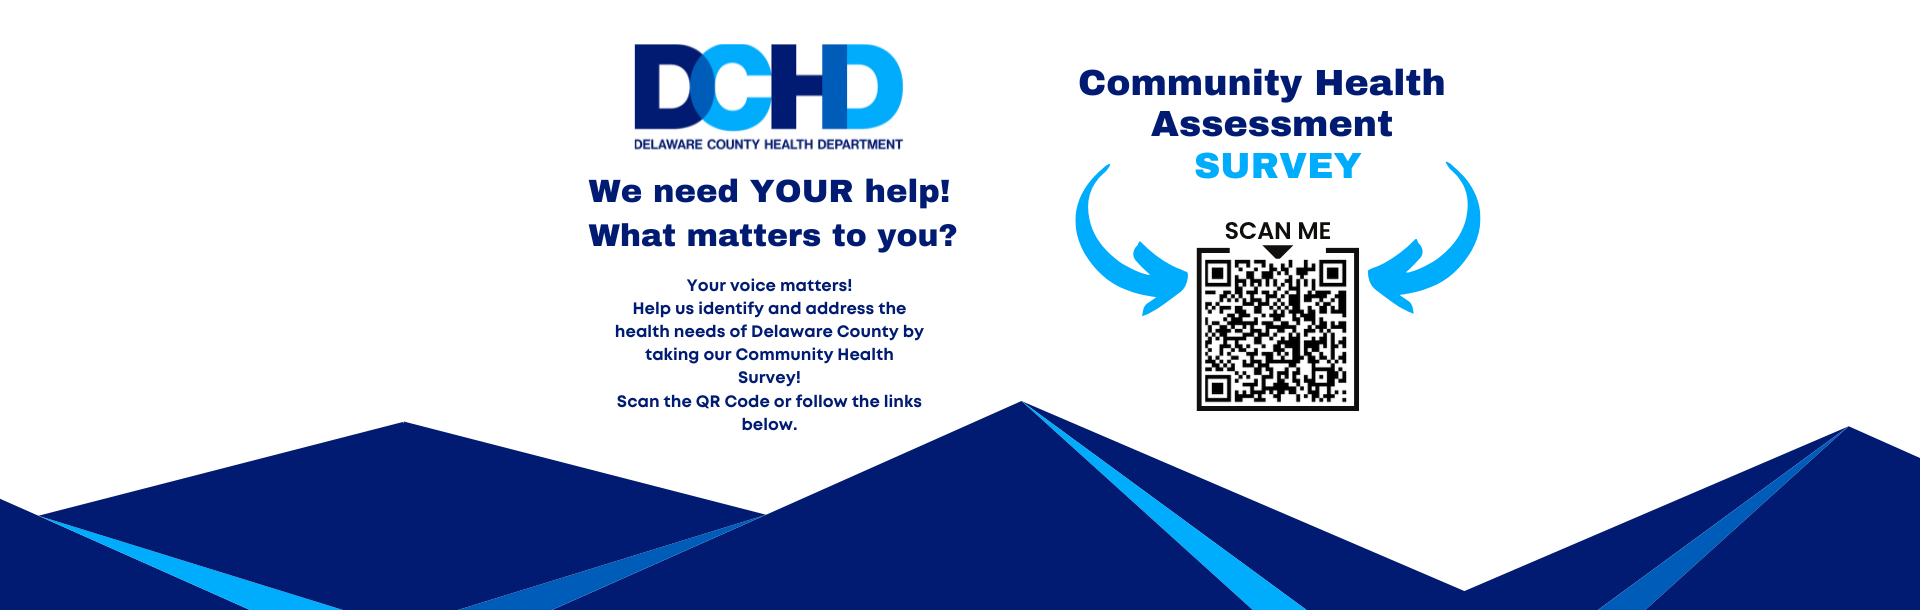 Community Health Assessment Survey